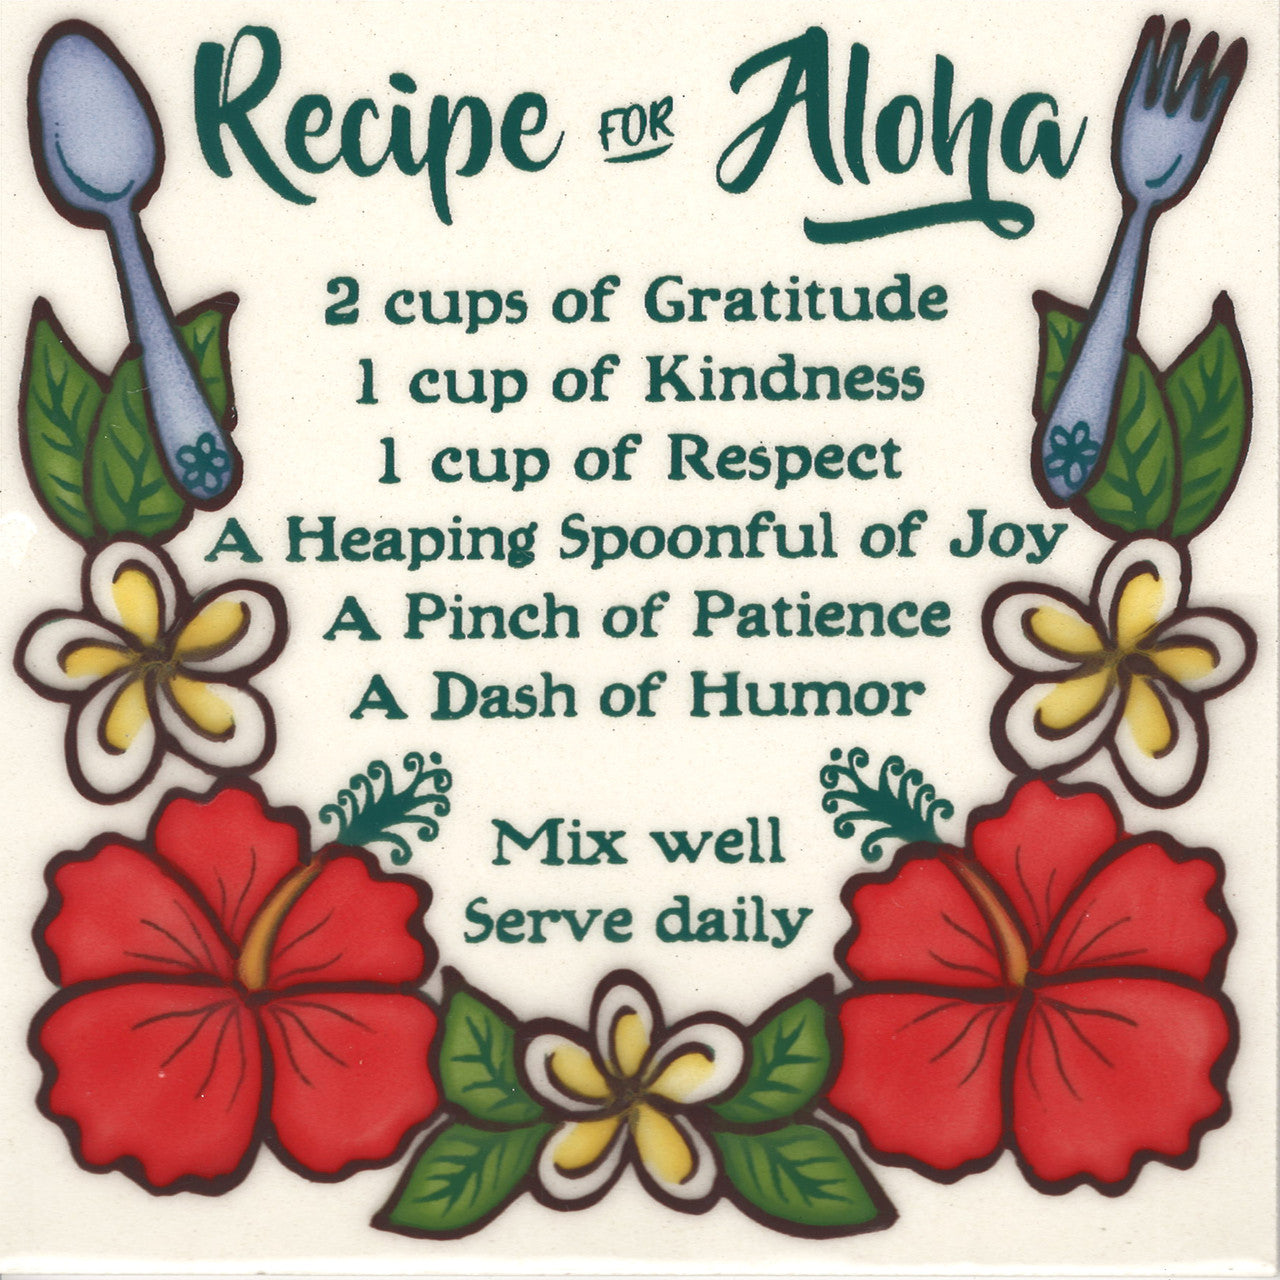 Recipe for Aloha